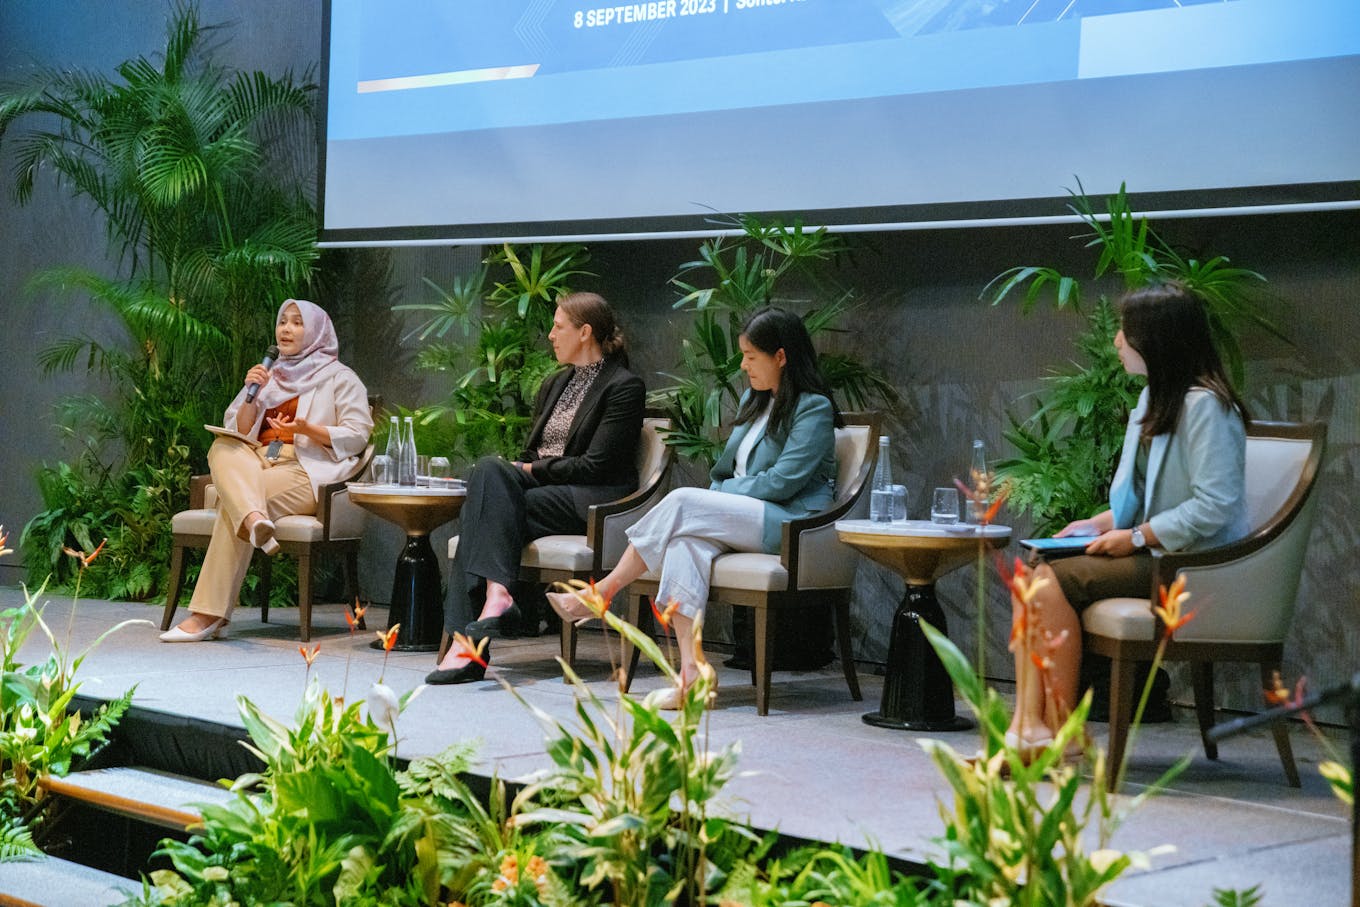 UCFS Malaysia plenary discussion